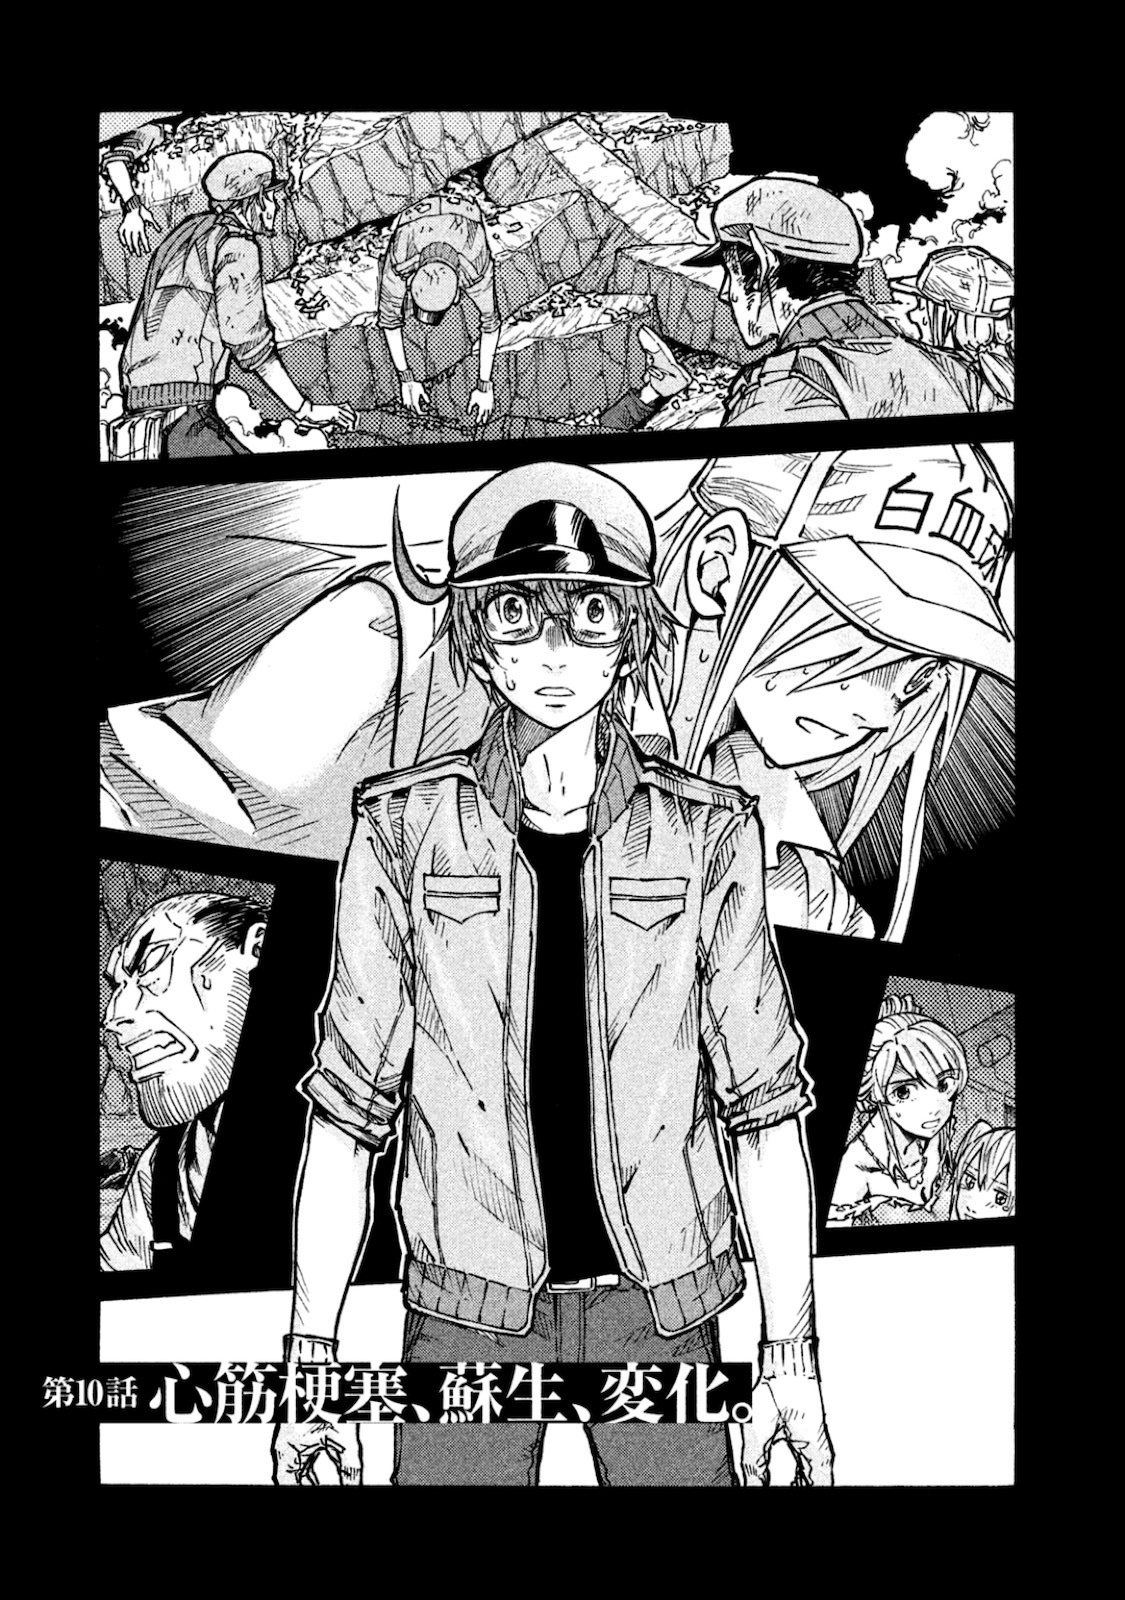 Hataraku Saibou BLACK - Chapter 10 - Page 1